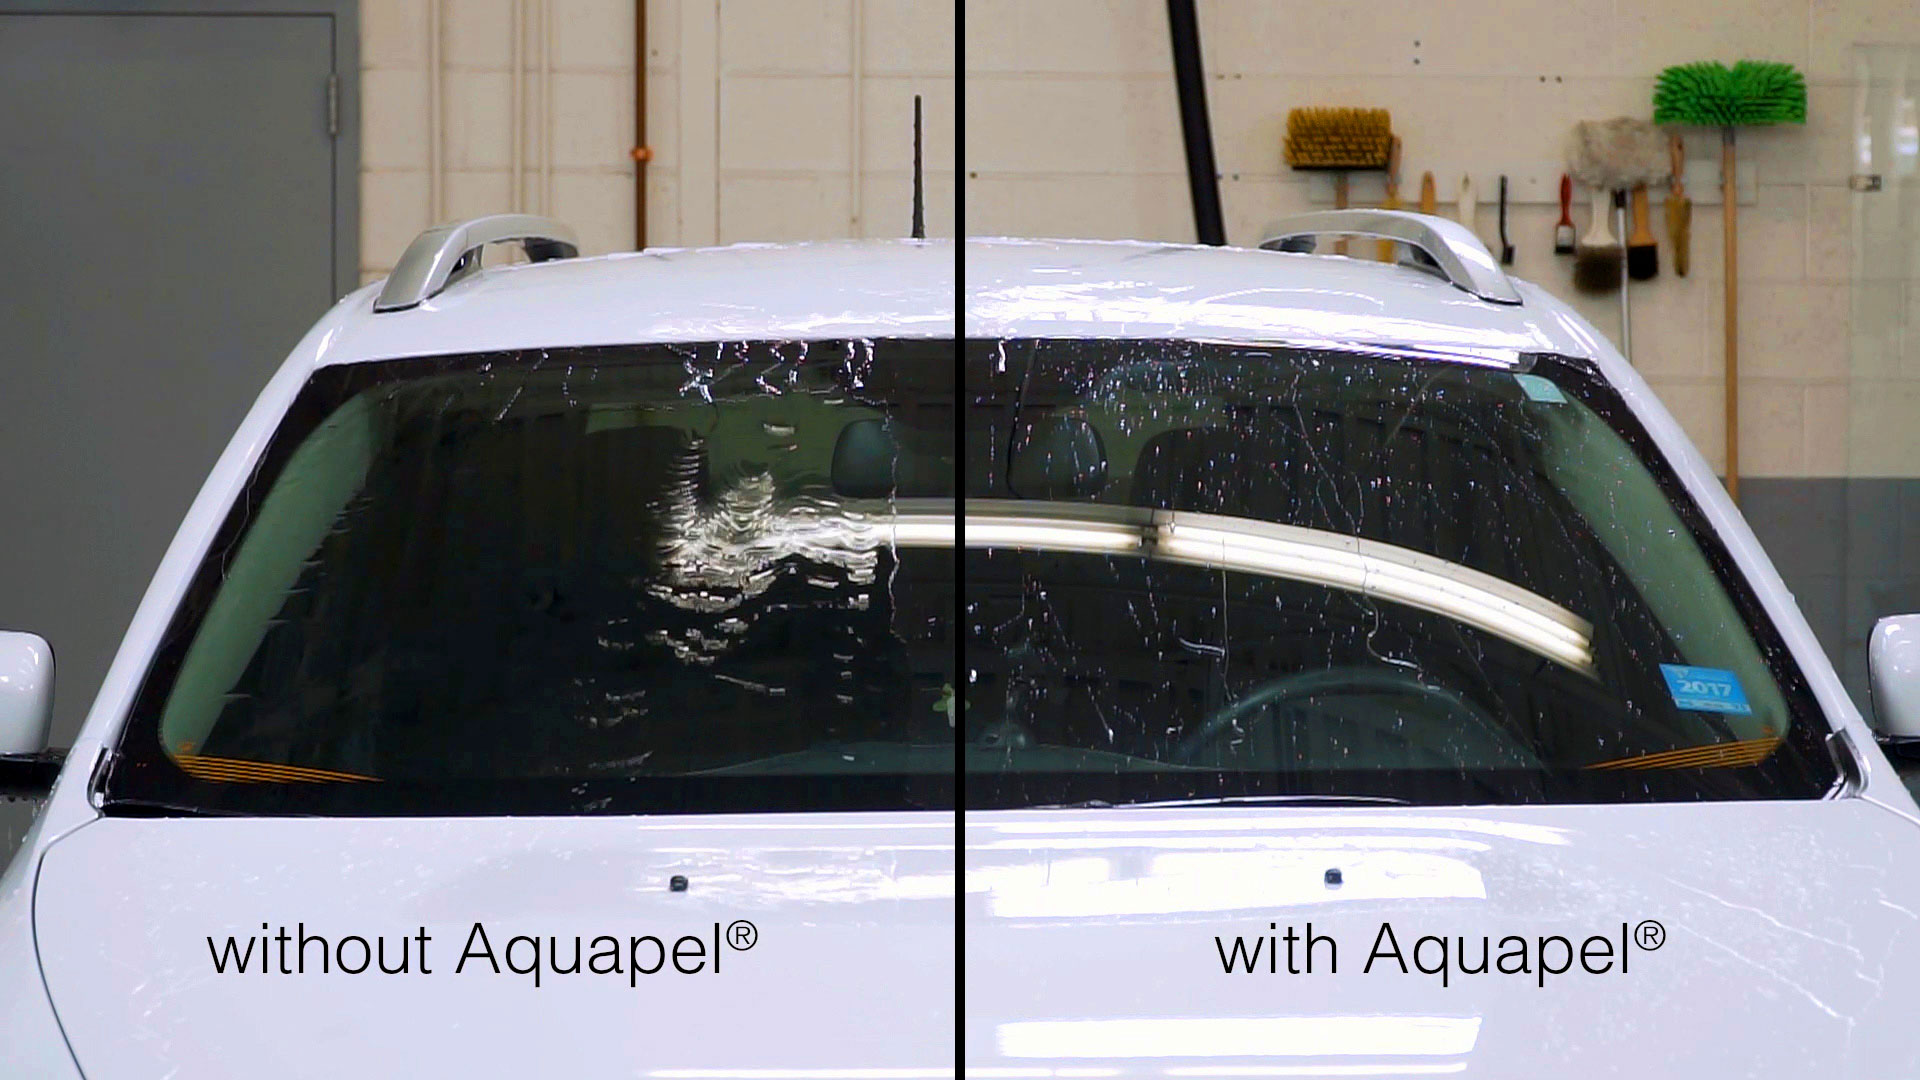 NRUDPQV Car Windshield Glass Coating Agent Hydrophobic Water Rain Repellent  Spray 100ML 